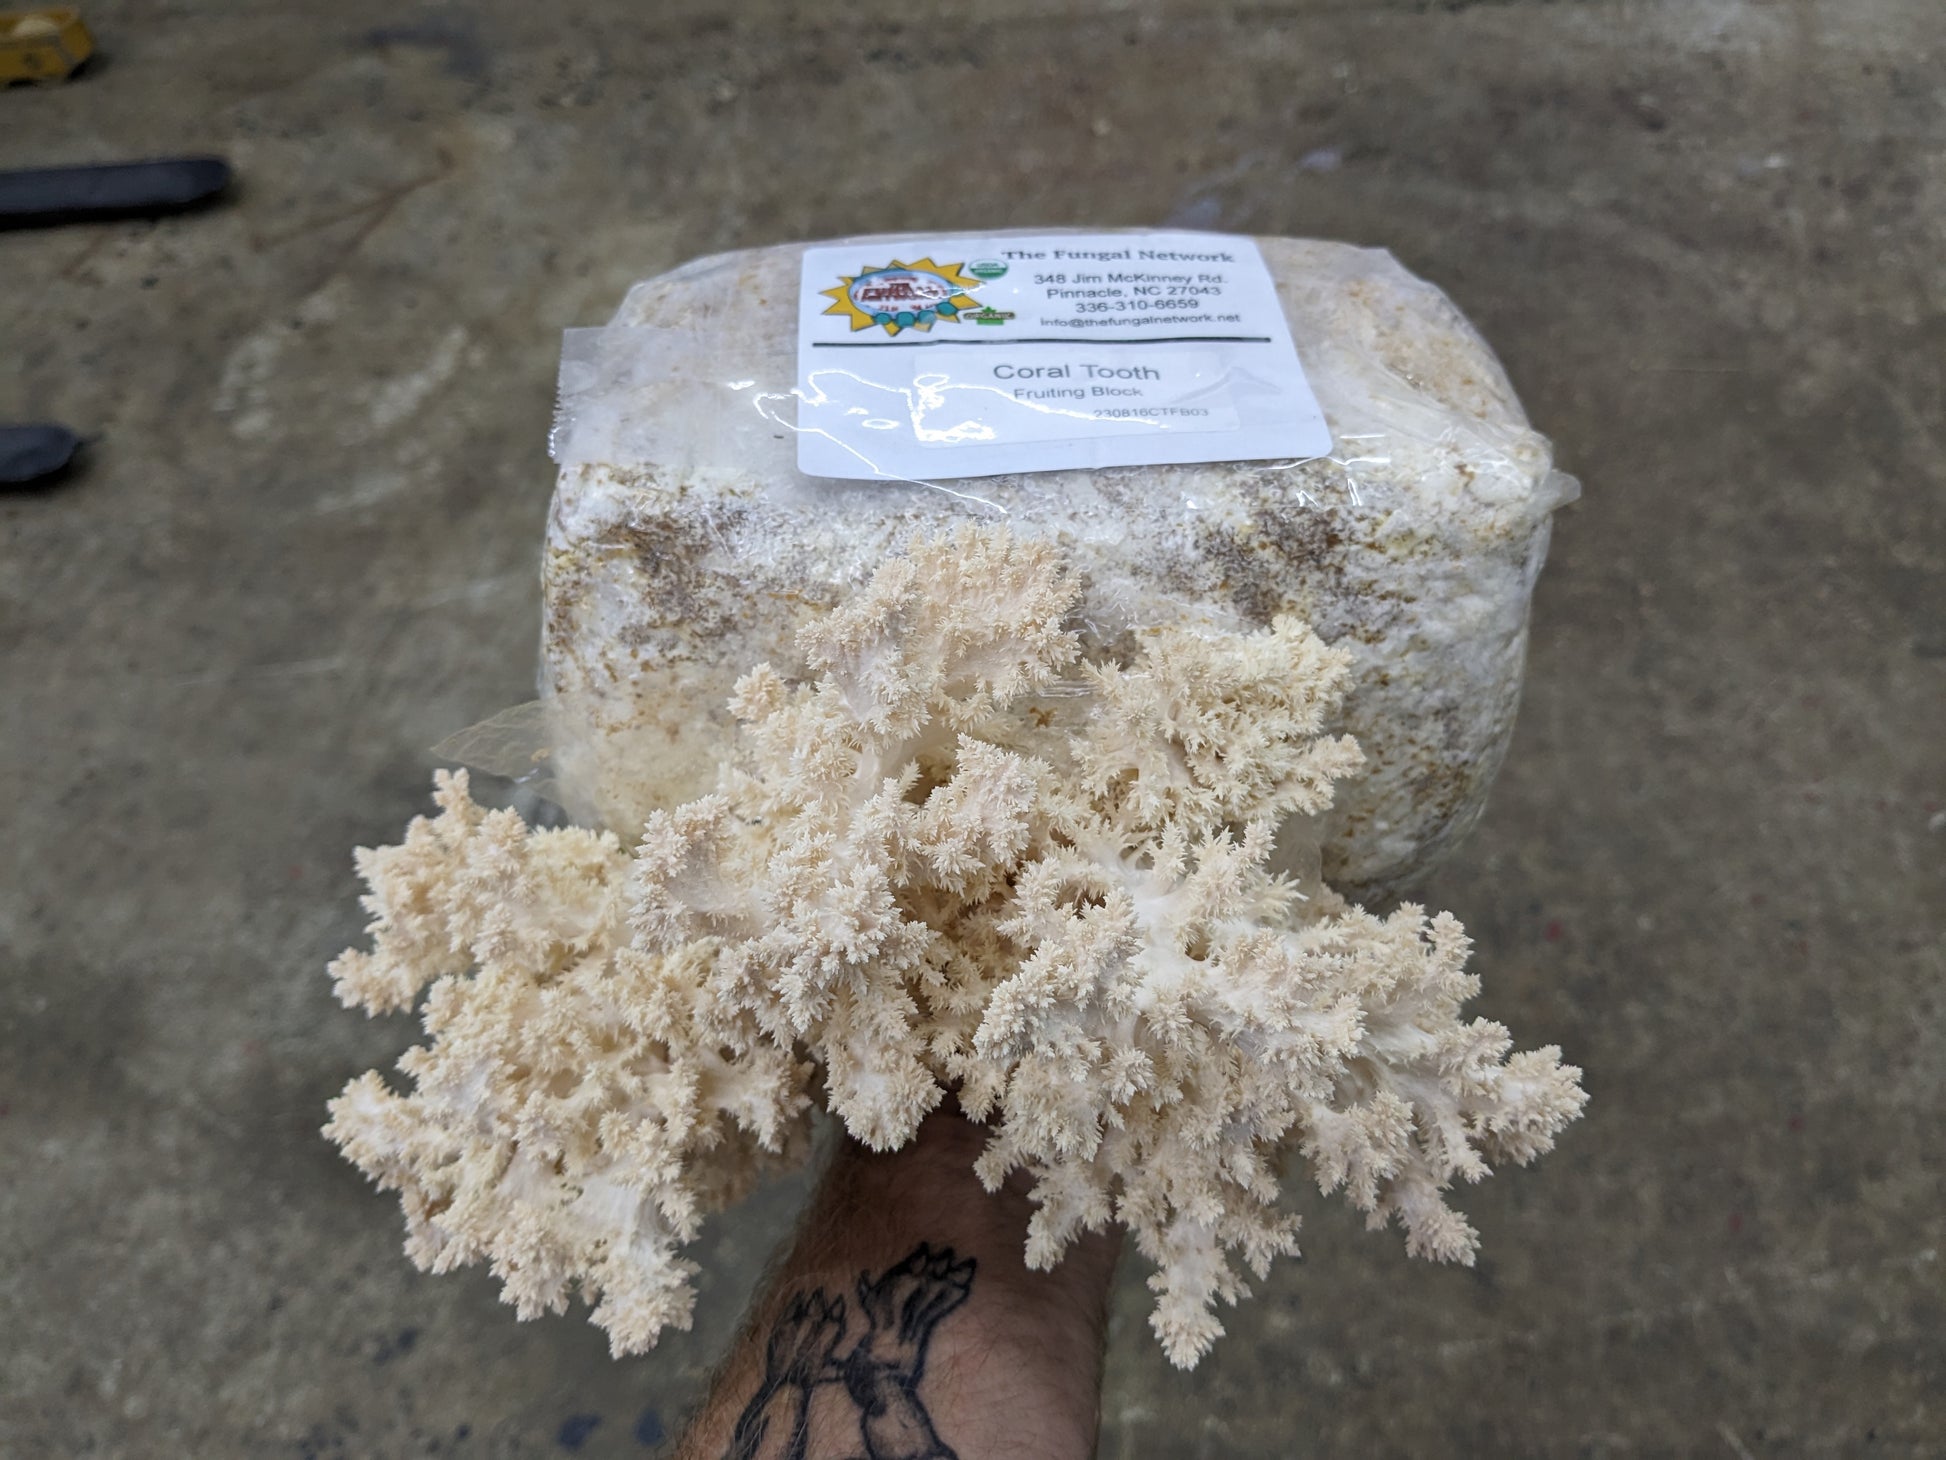 Coral tooth grow-at-home mushroom fruiting block